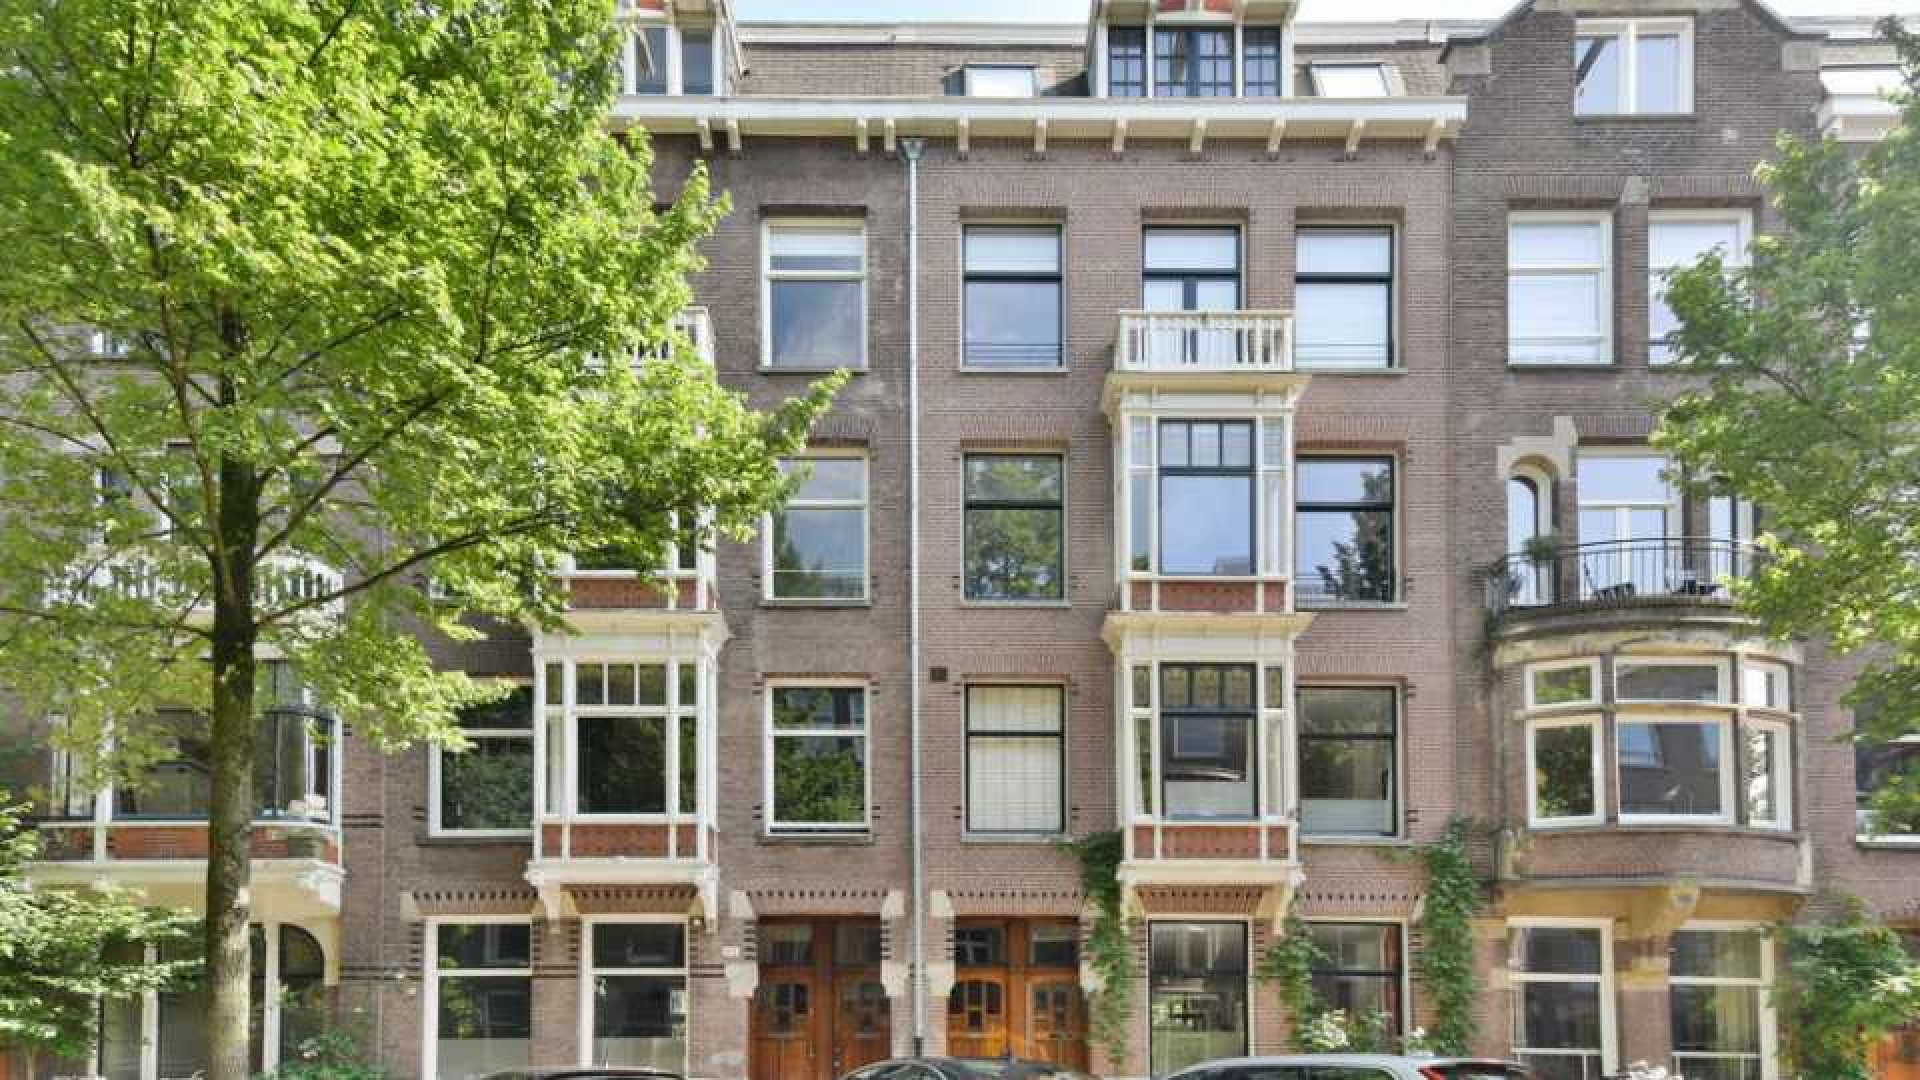 Binnenkijken in Amsterdams miljoenenpand van Ajax speler Klaas Jan Huntelaar.